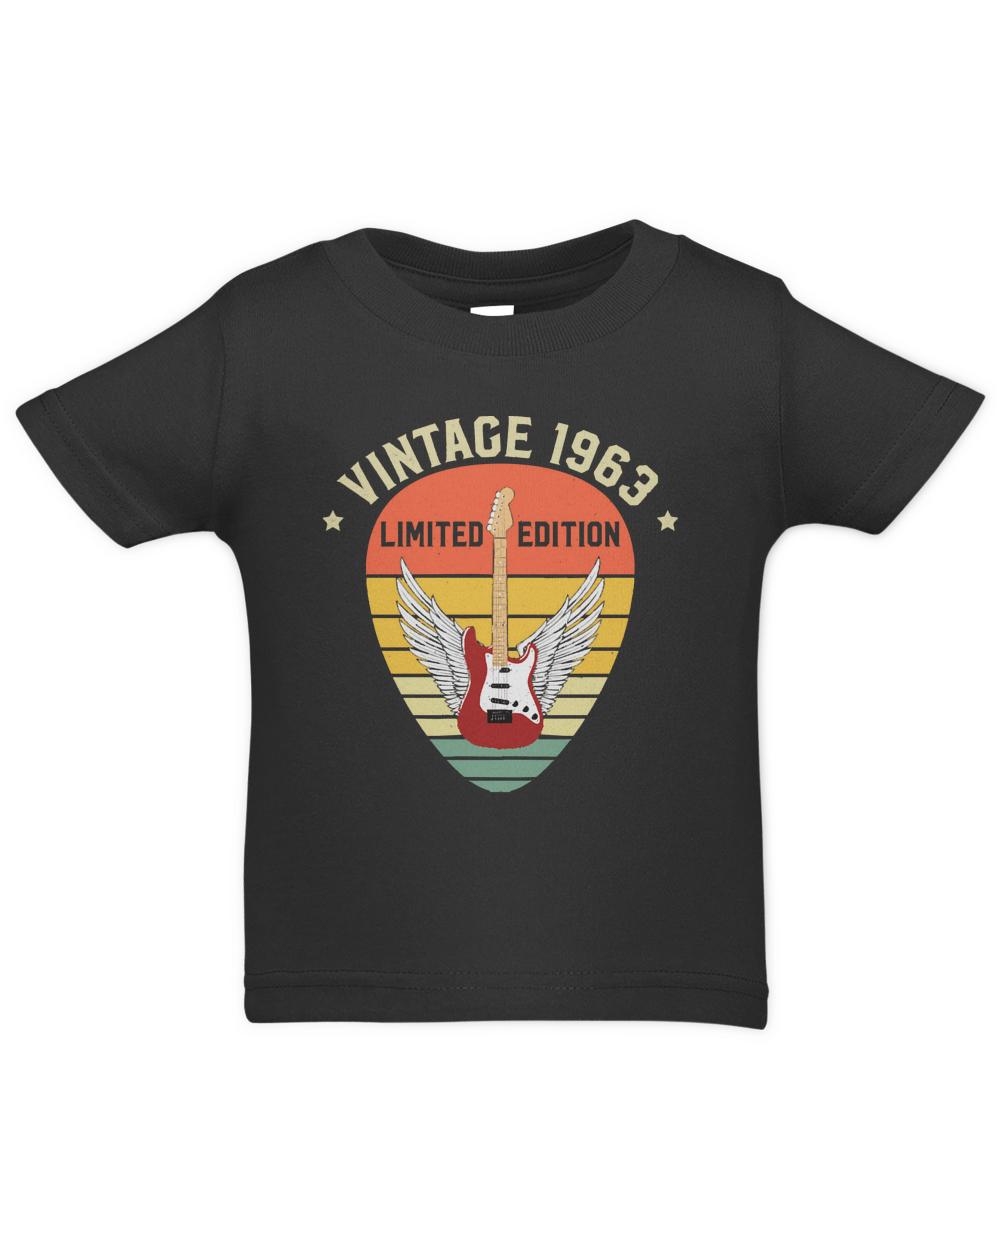 Vintage 1963 T- Shirt Vintage 1963 Limited Edition Guitar T- Shirt